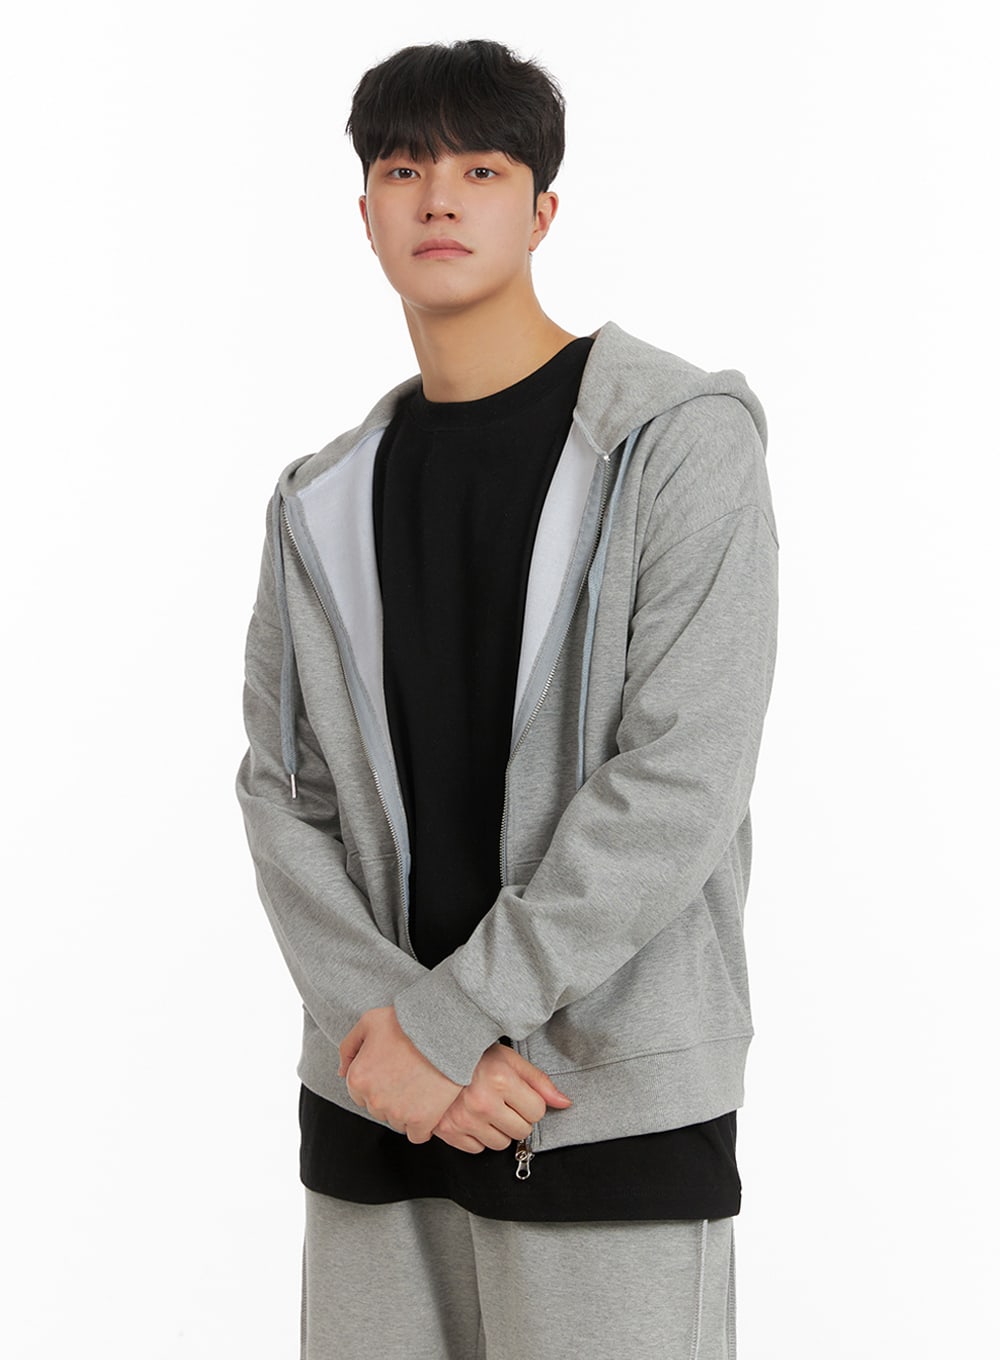 mens-cotton-hoodie-jacket-ia402